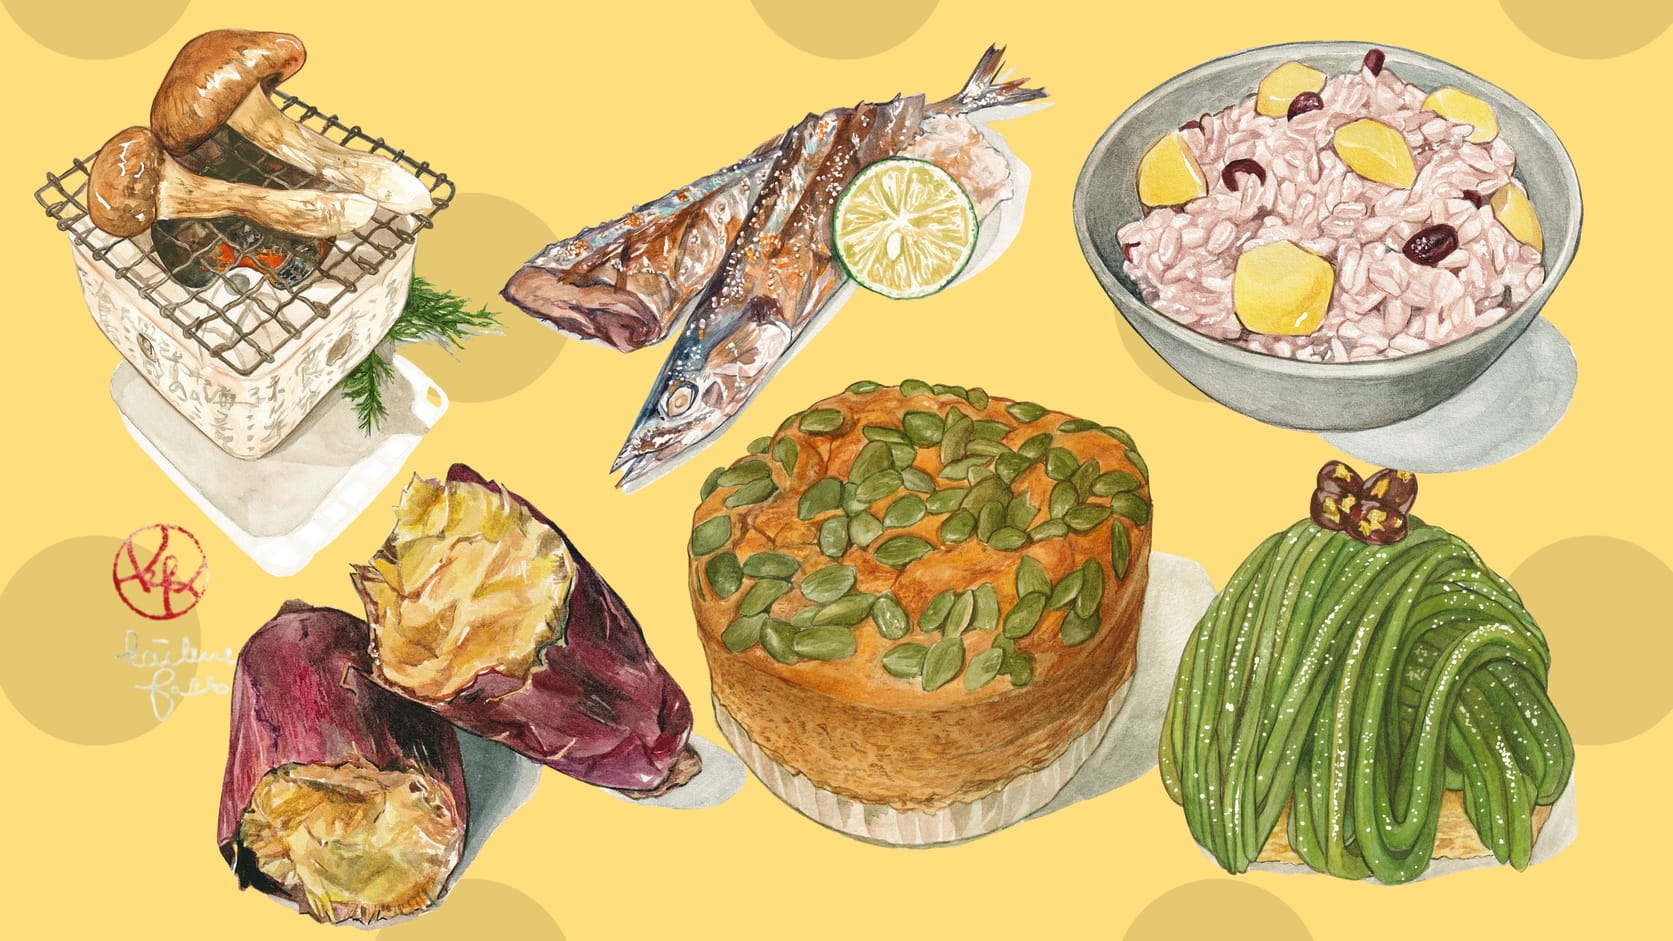 TW Creatives: “Autumn Foods” Series by Tokyo-Based Illustrator Kailene Falls